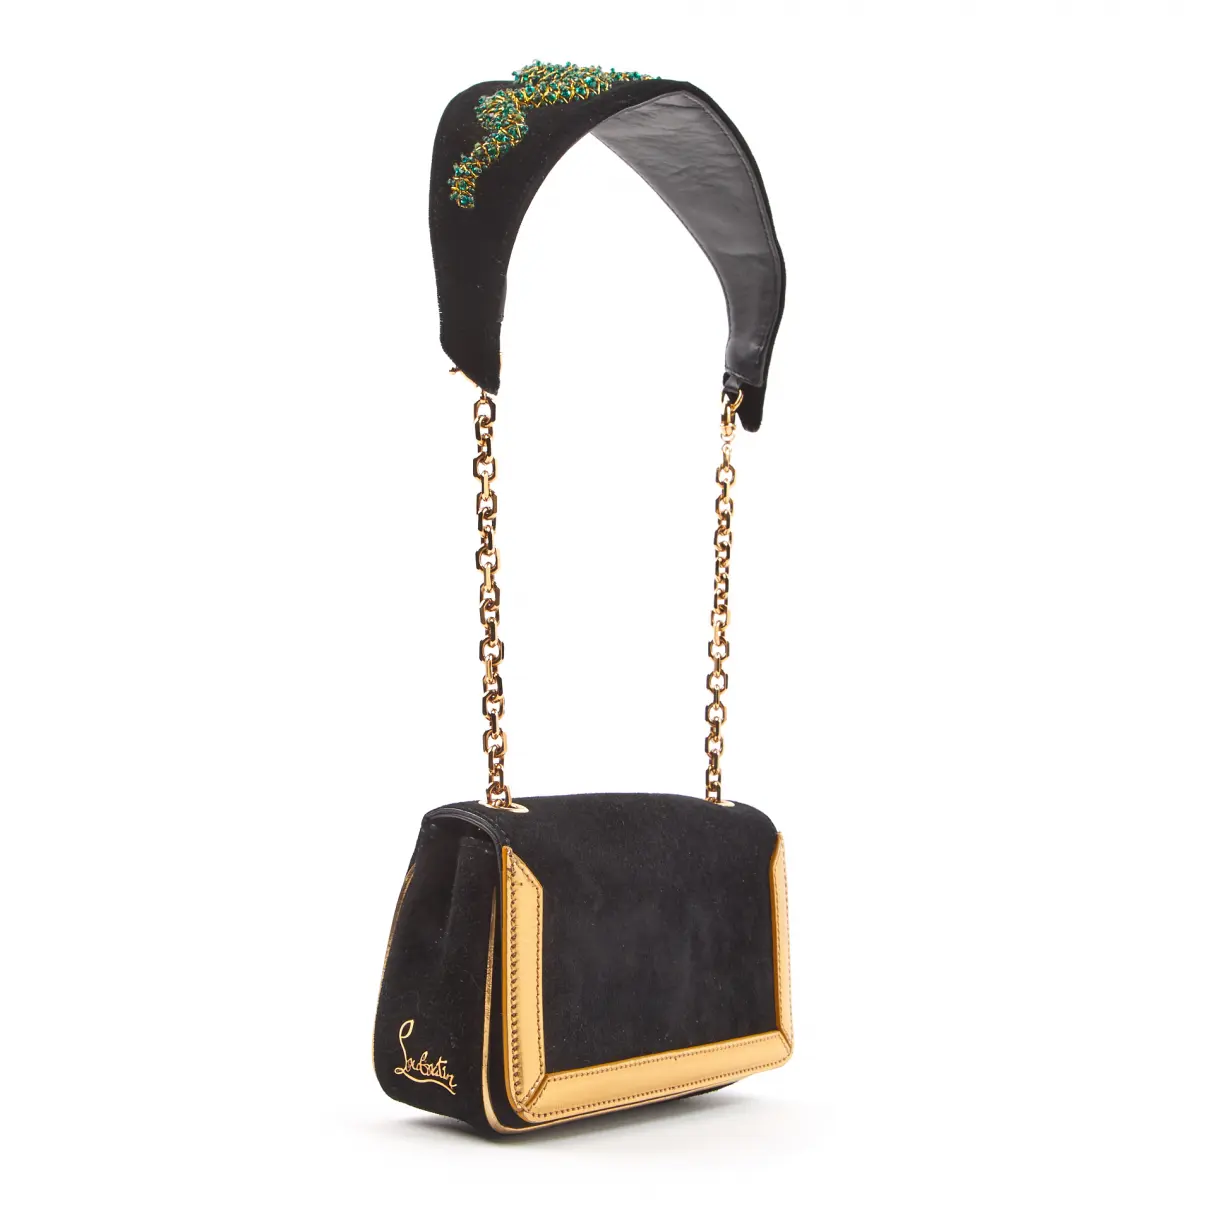 Buy Christian Louboutin Clutch bag online